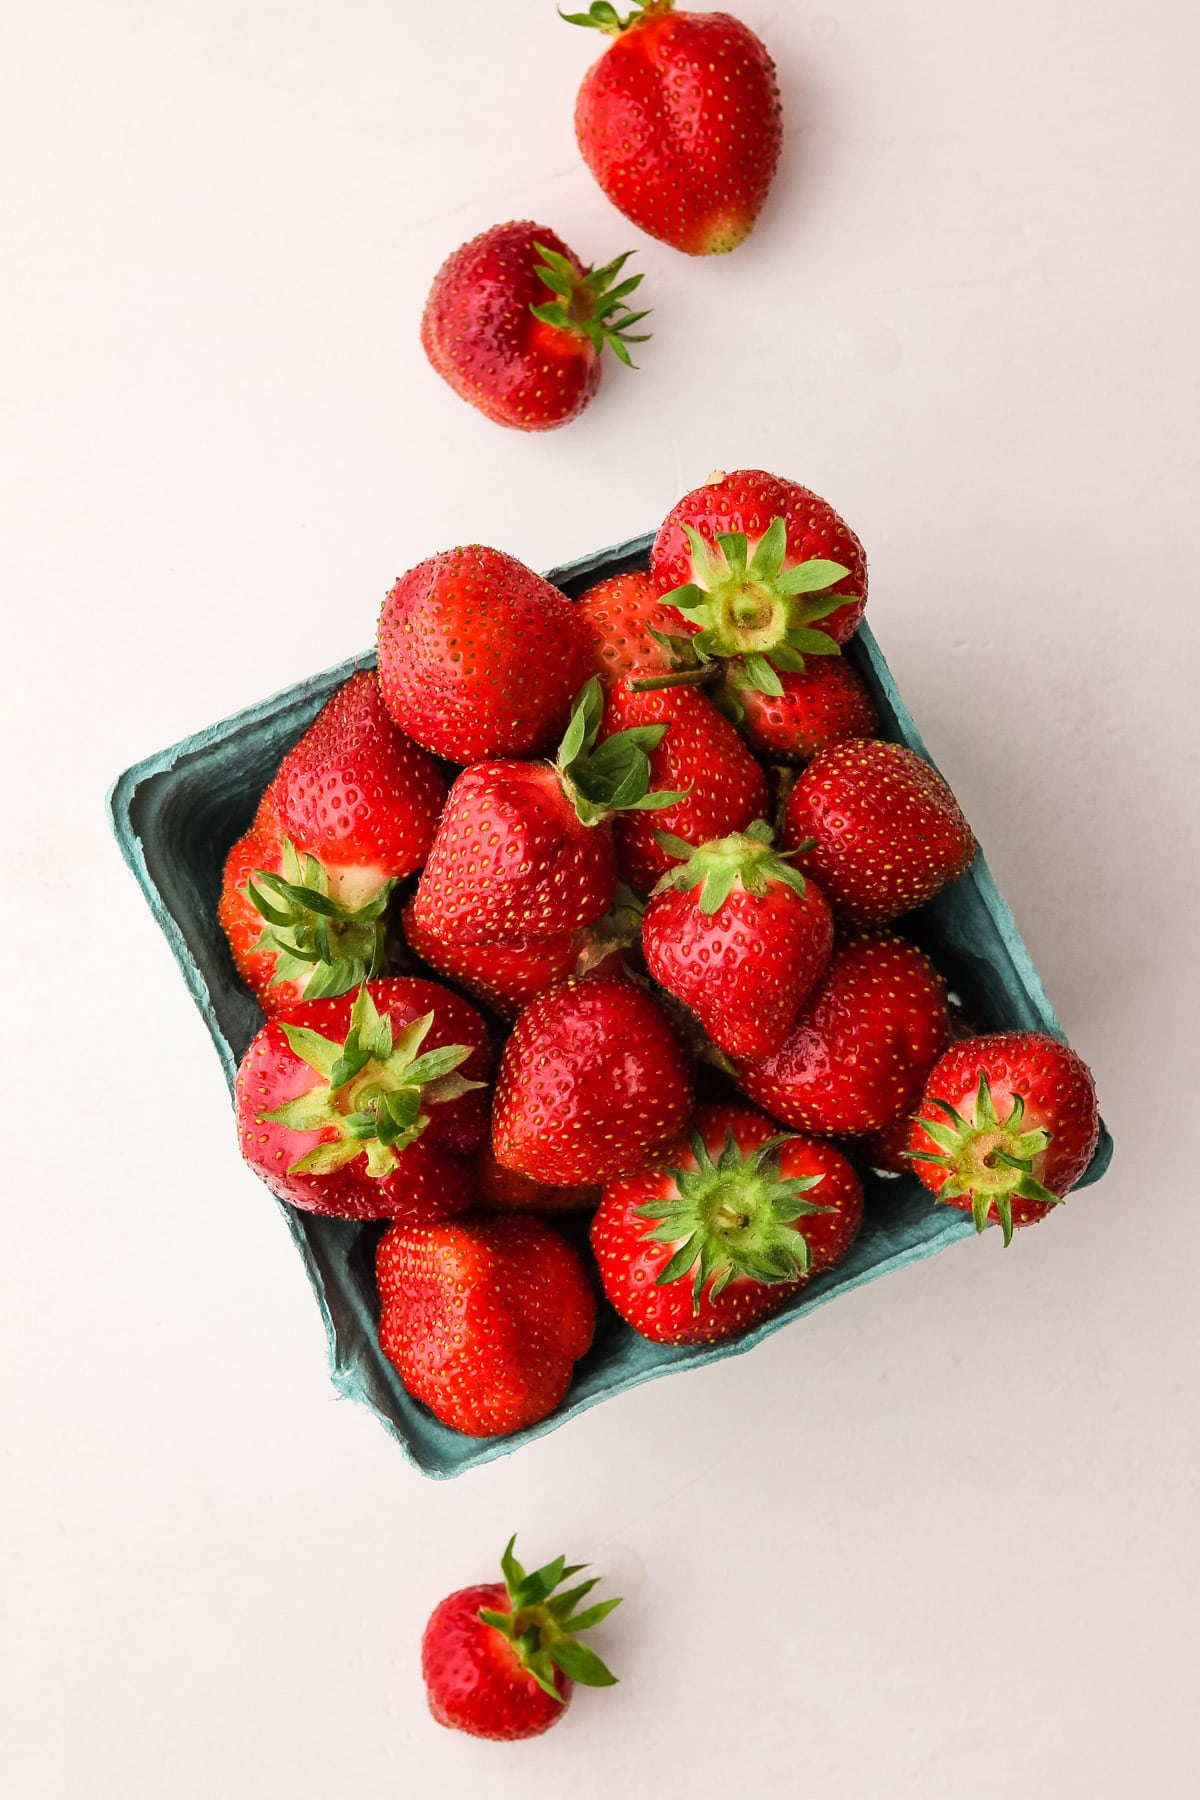 A basket of ripe strawberries.